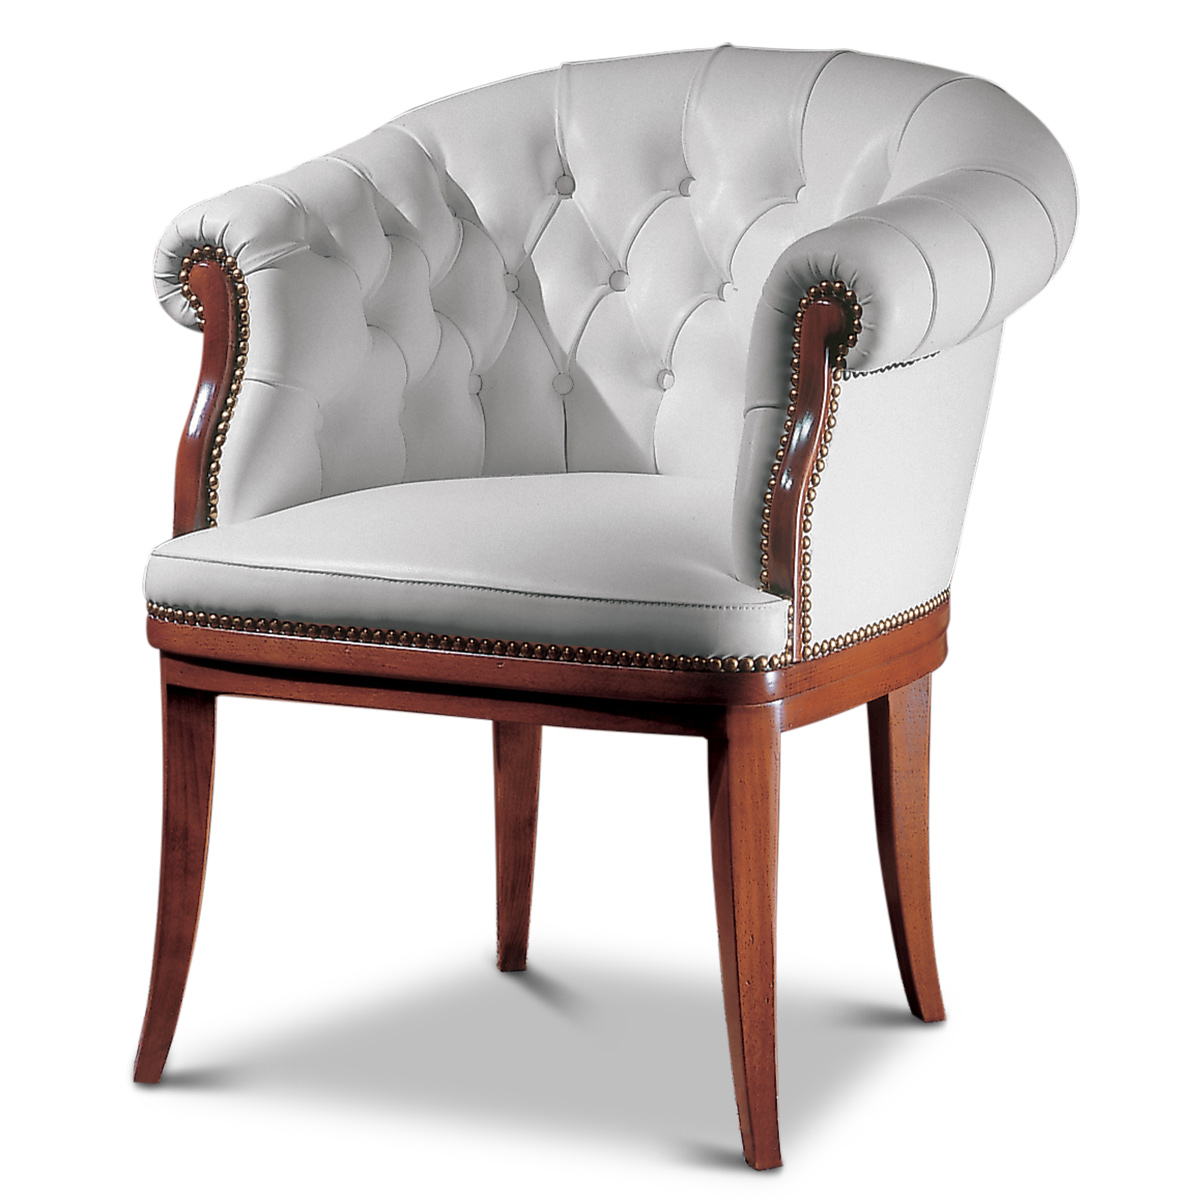 Office armchair “ELEGANCE” made in italy su misura